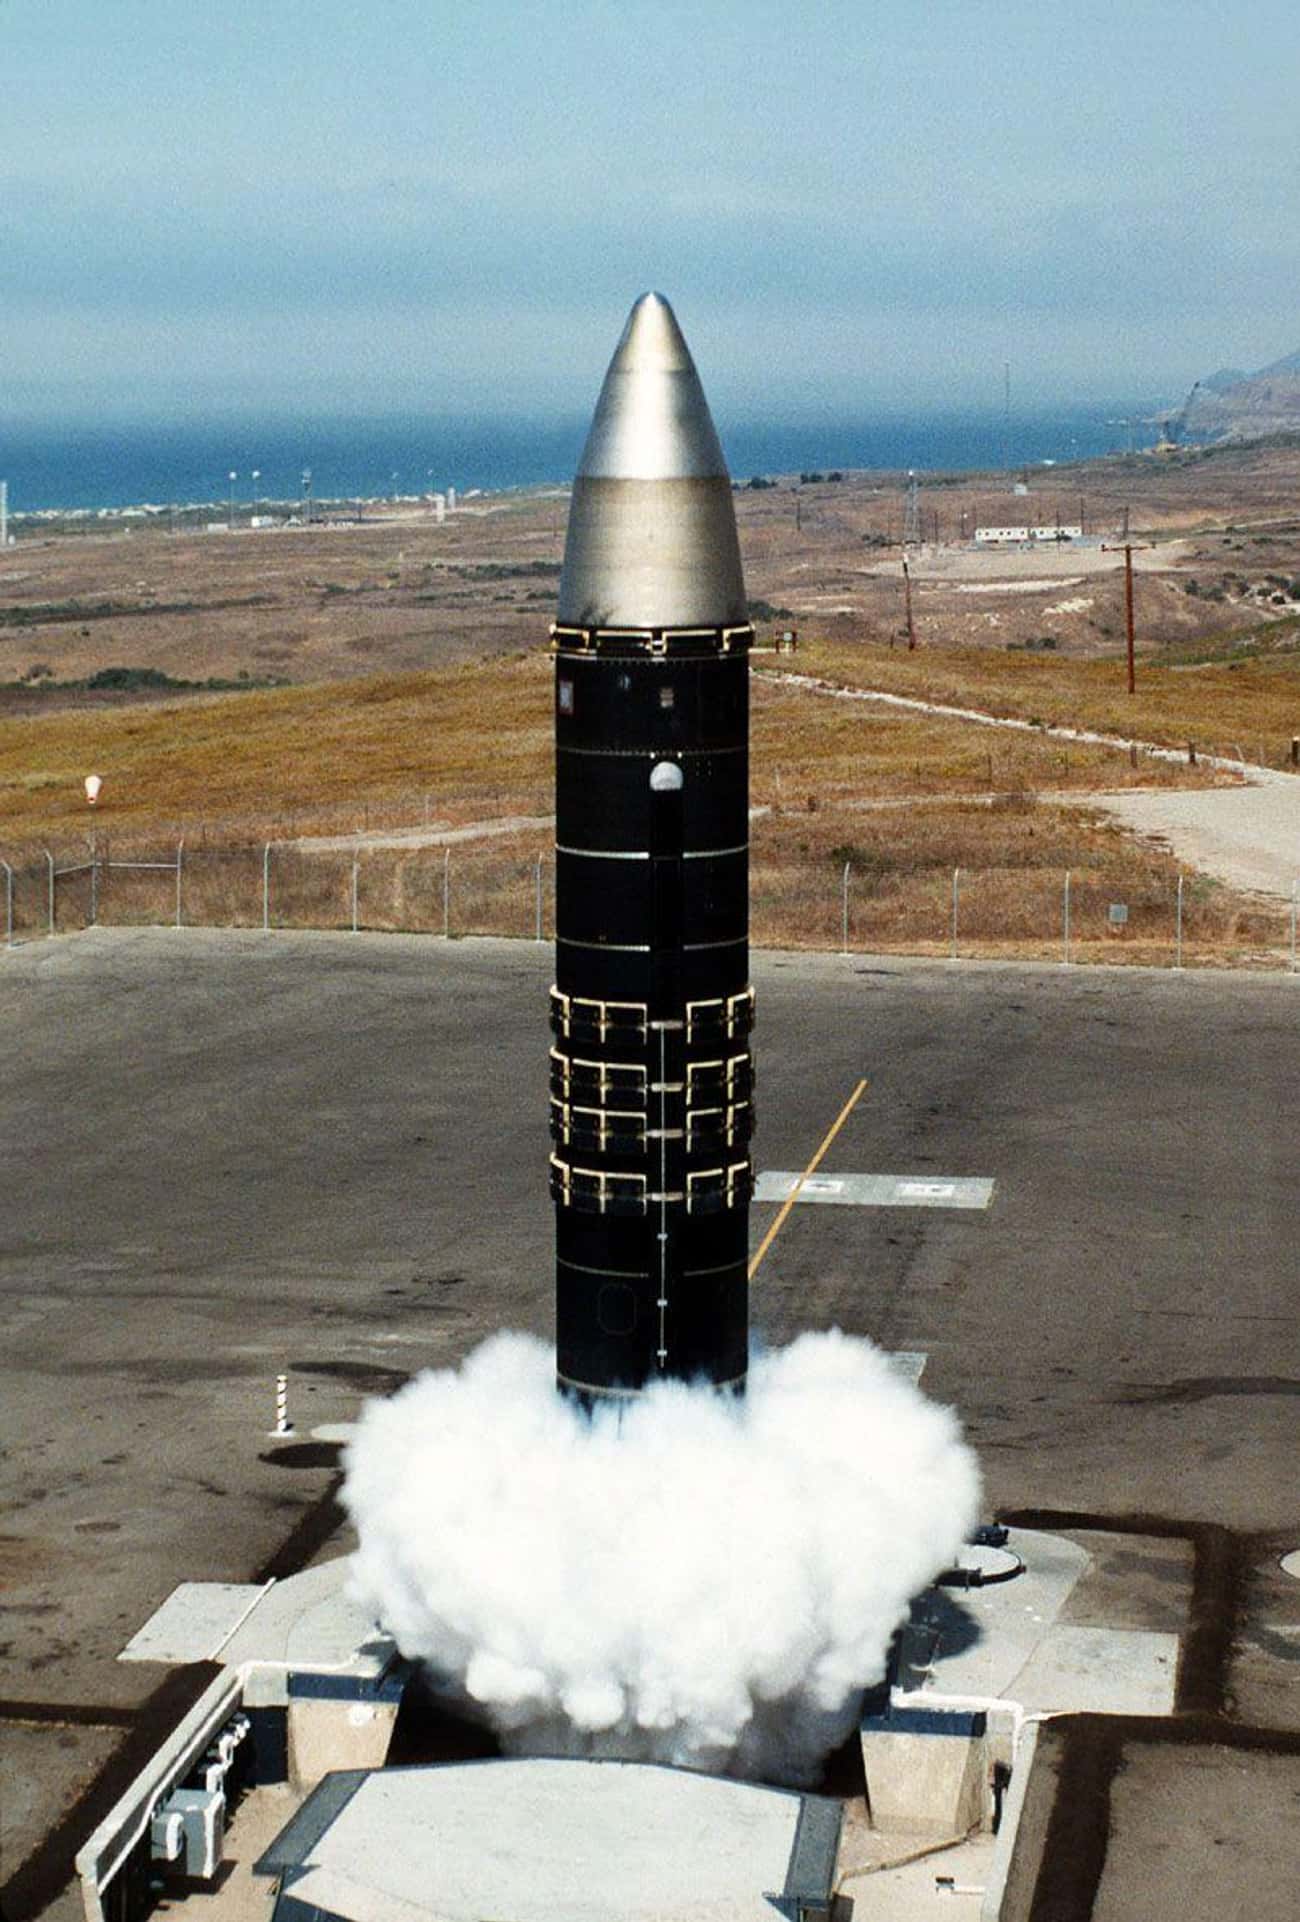 MX Missile - $25 Billion